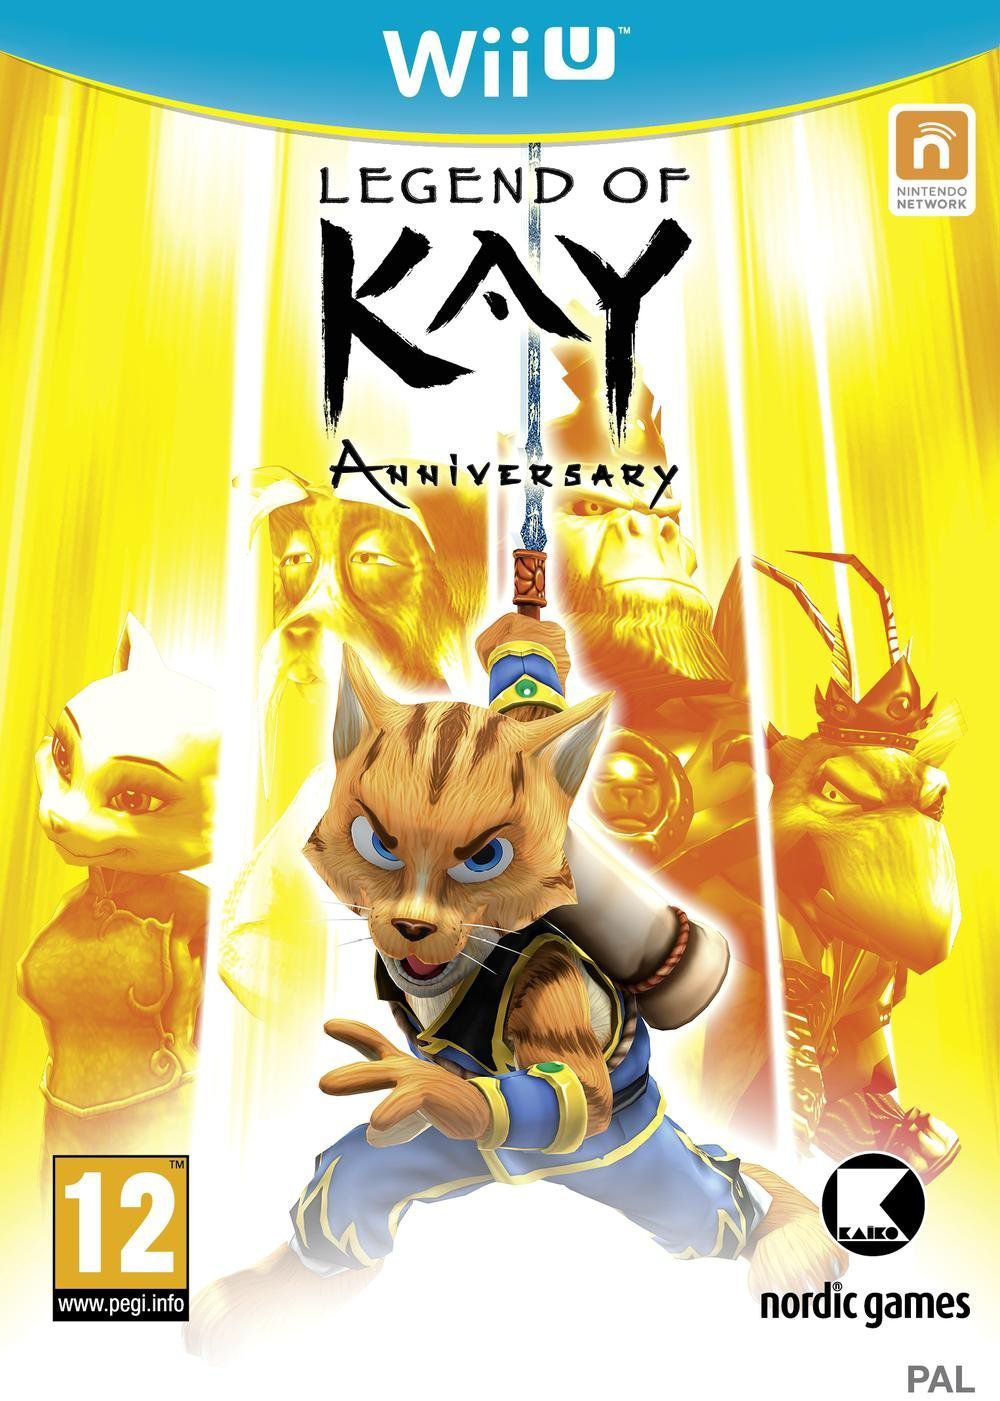 The Legend Of Kay Anniversary Wiiu